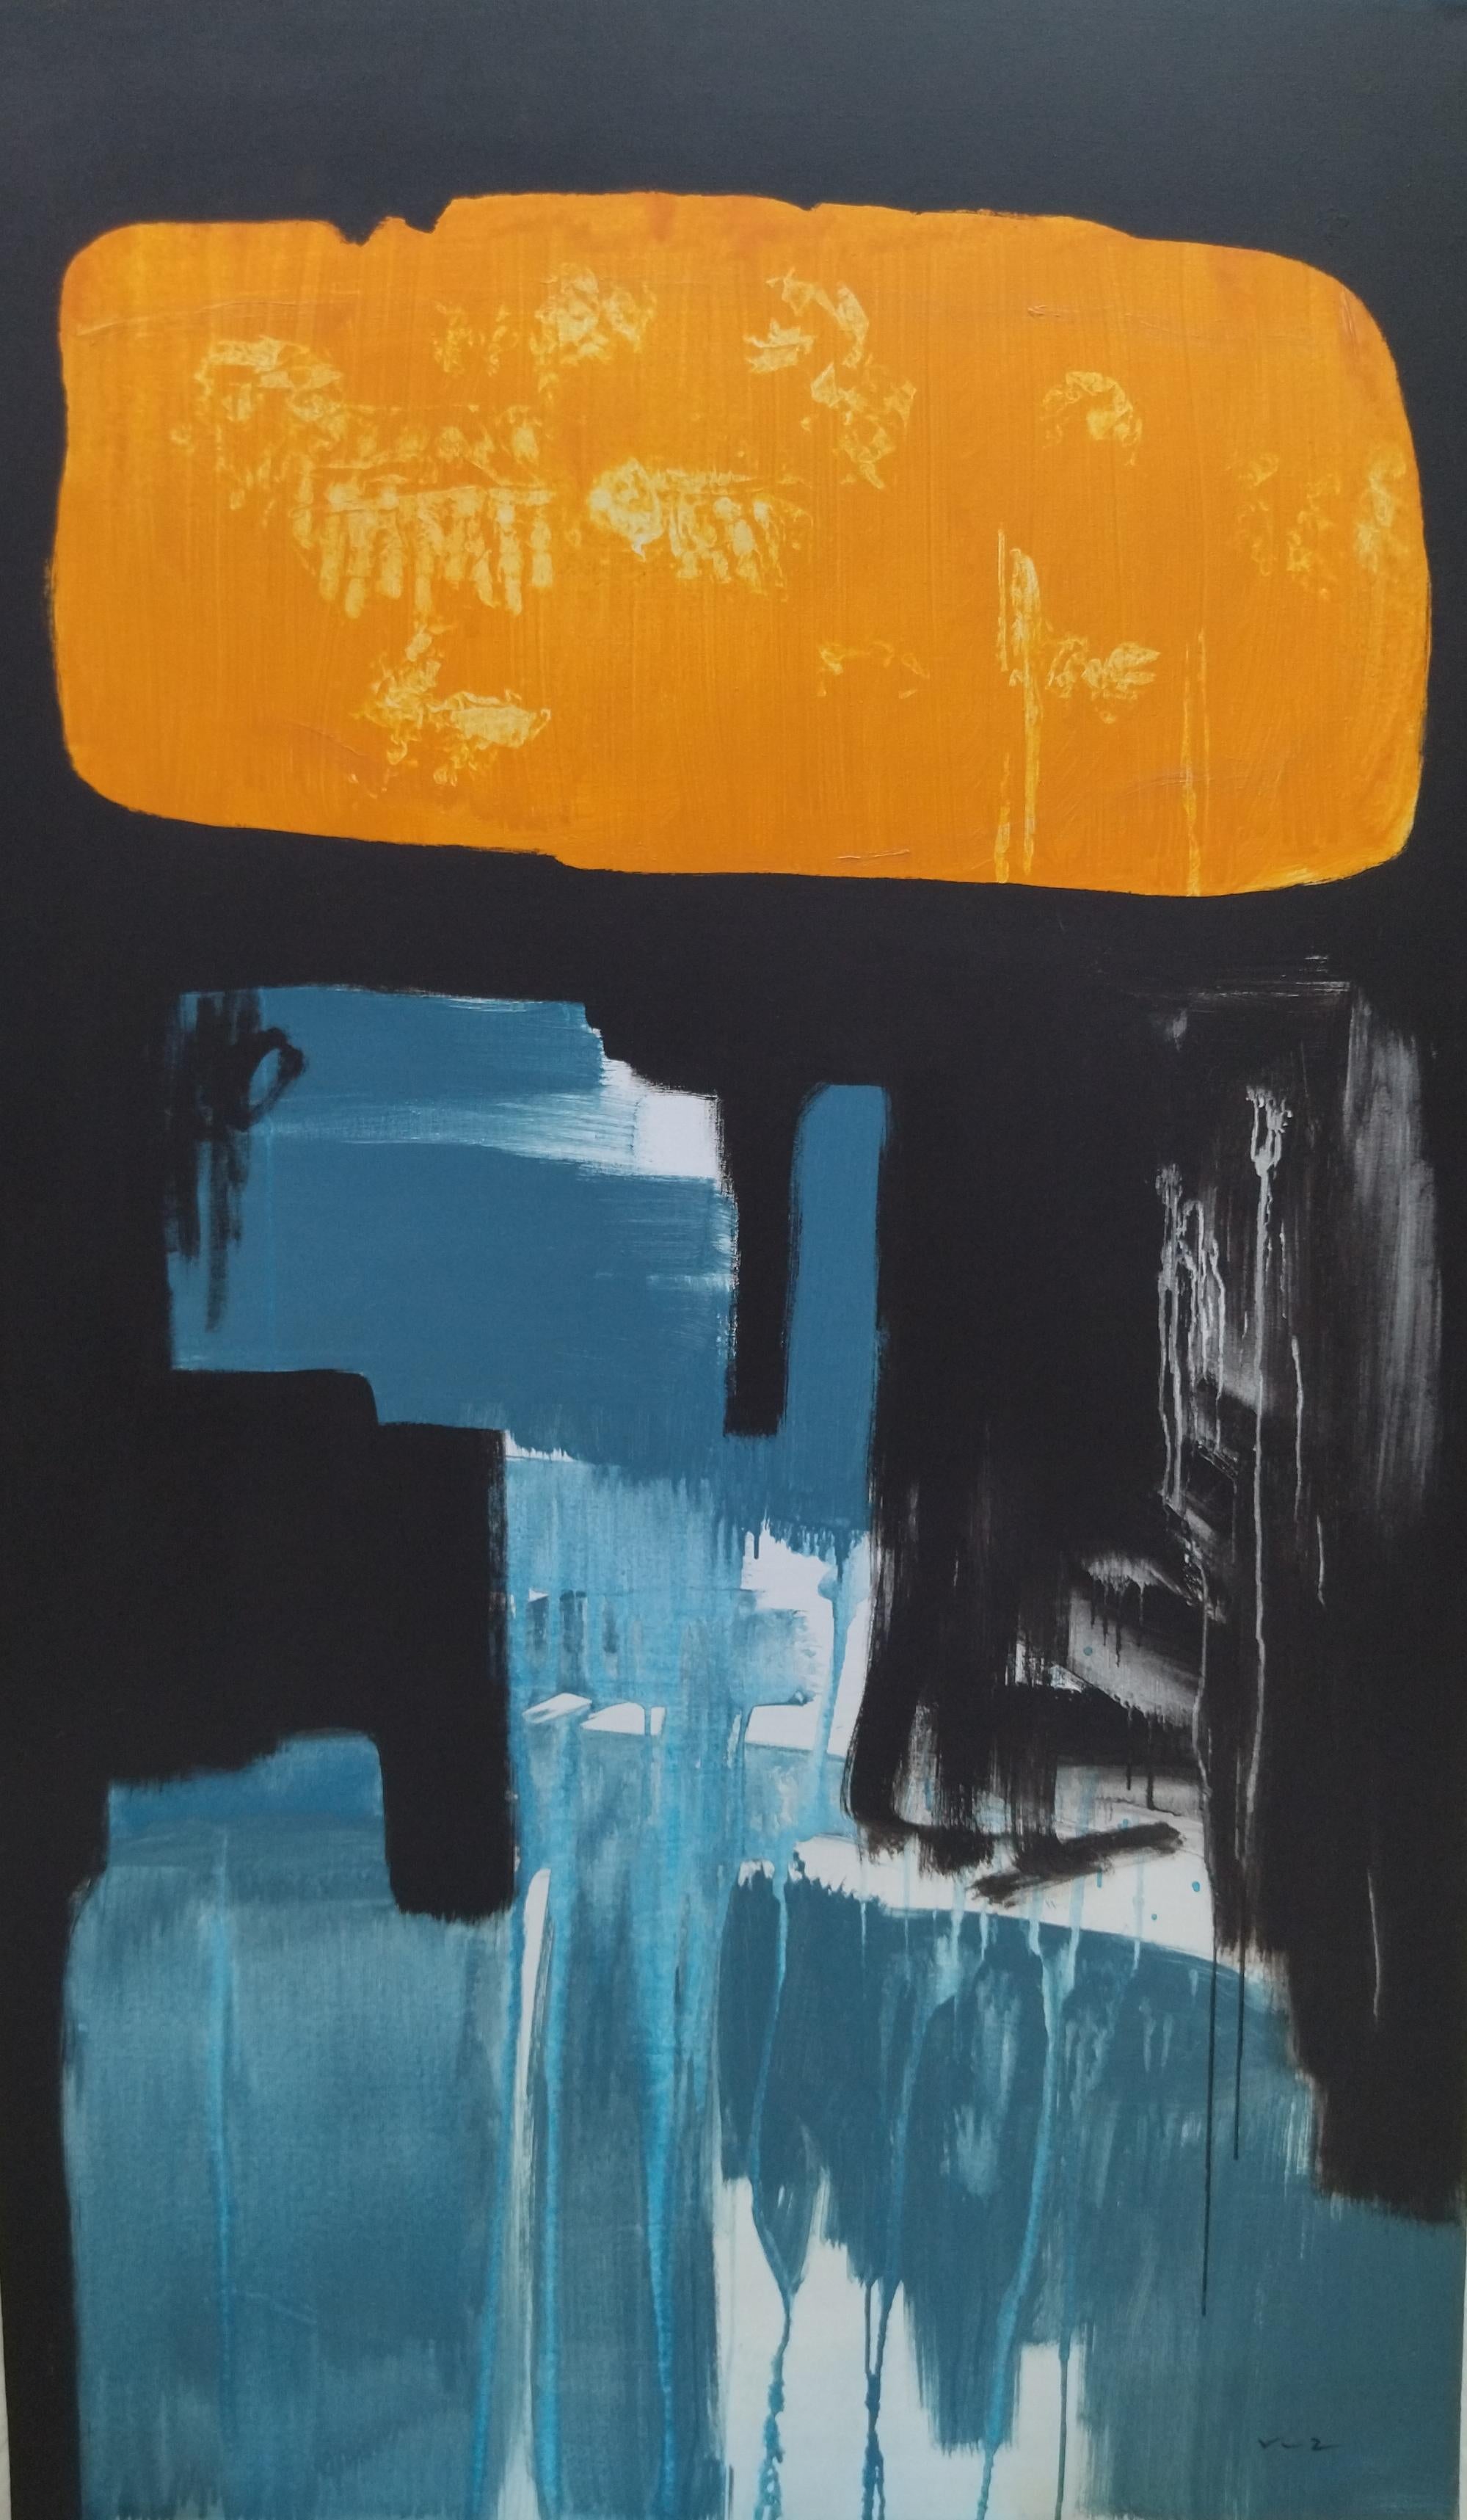 RAFAEL RUZ Abstract Painting - Ruz  Black  Golden   Yellow  Blue   original abstract canvas acrylic painting